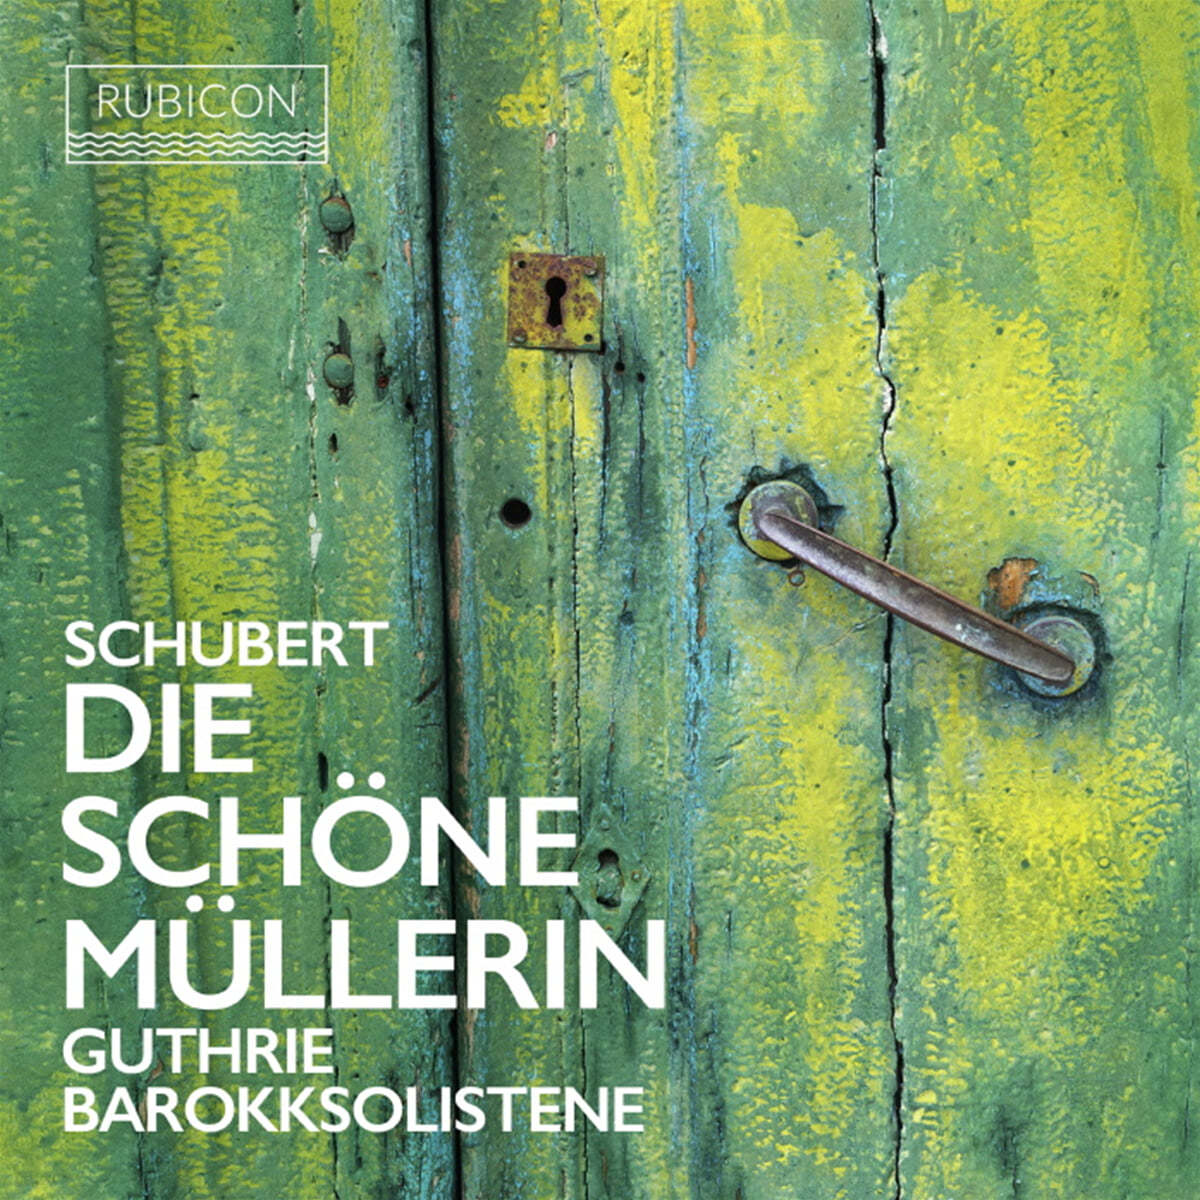 Thomas Guthrie 슈베르트: 아름다운 물방앗간의 아가씨 (Schubert: Die Schoene Mullerin)